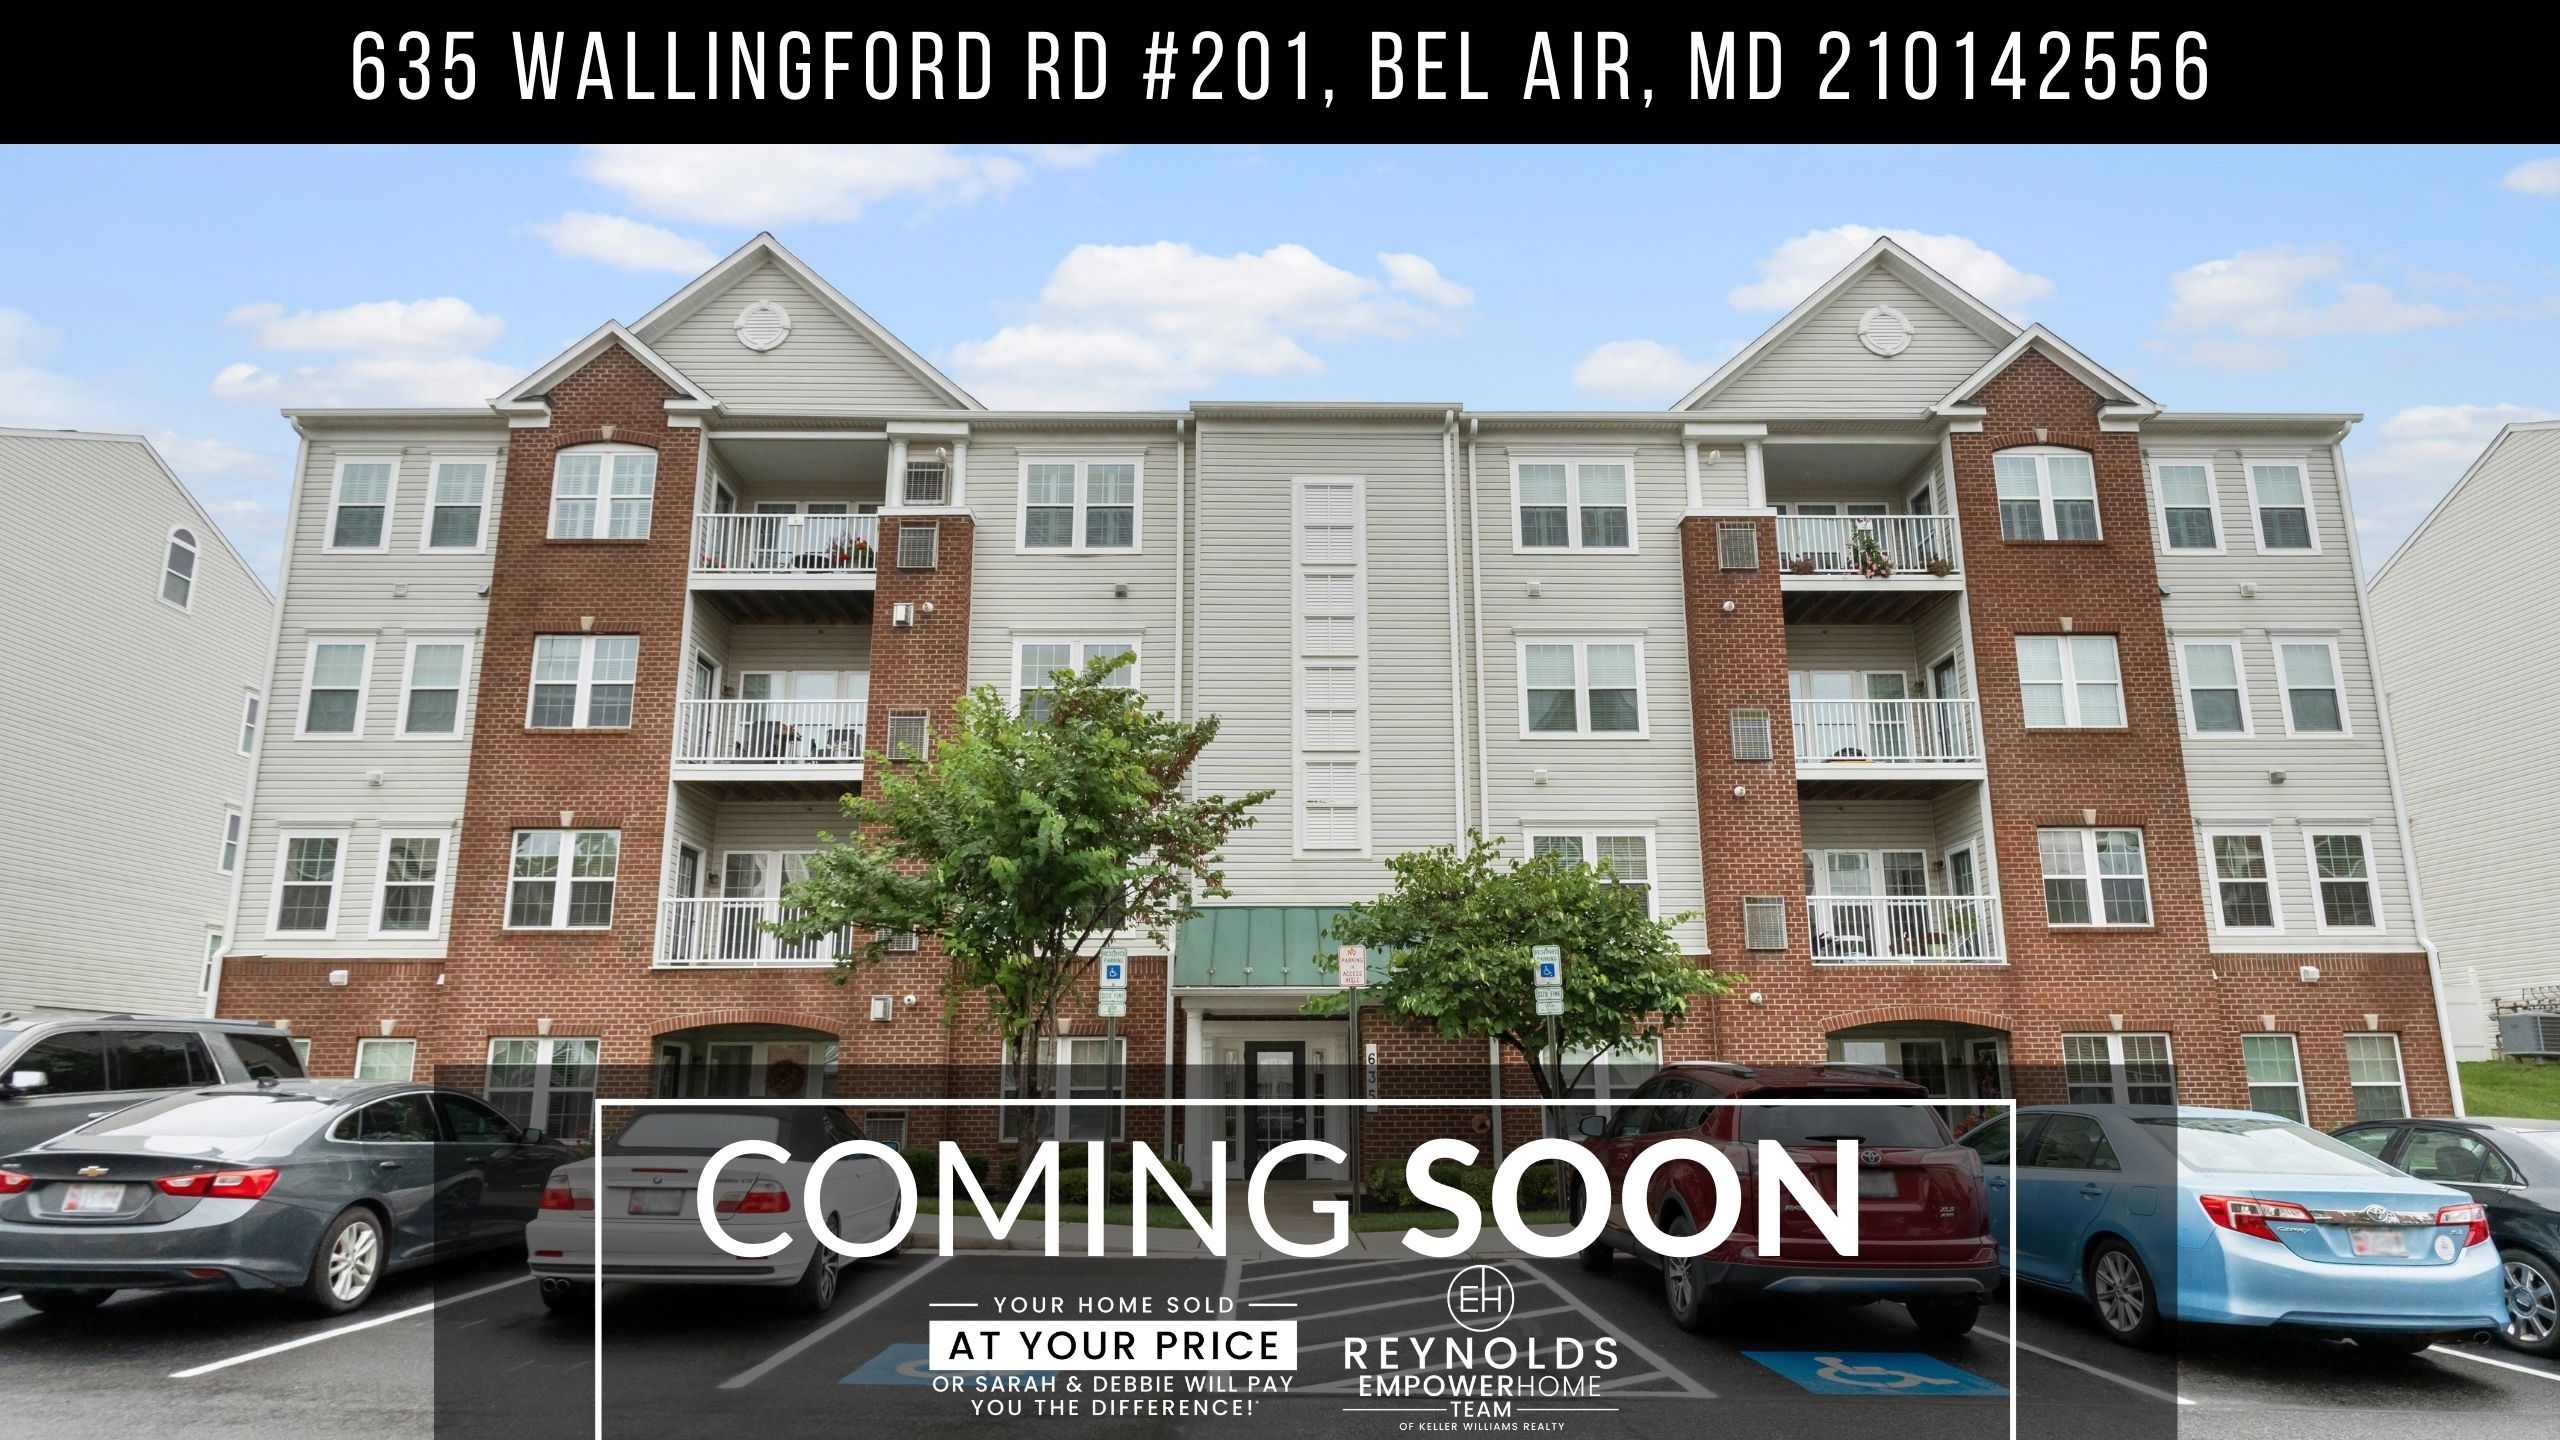 635 Wallingford Rd #201, Bel Air, MD 21014